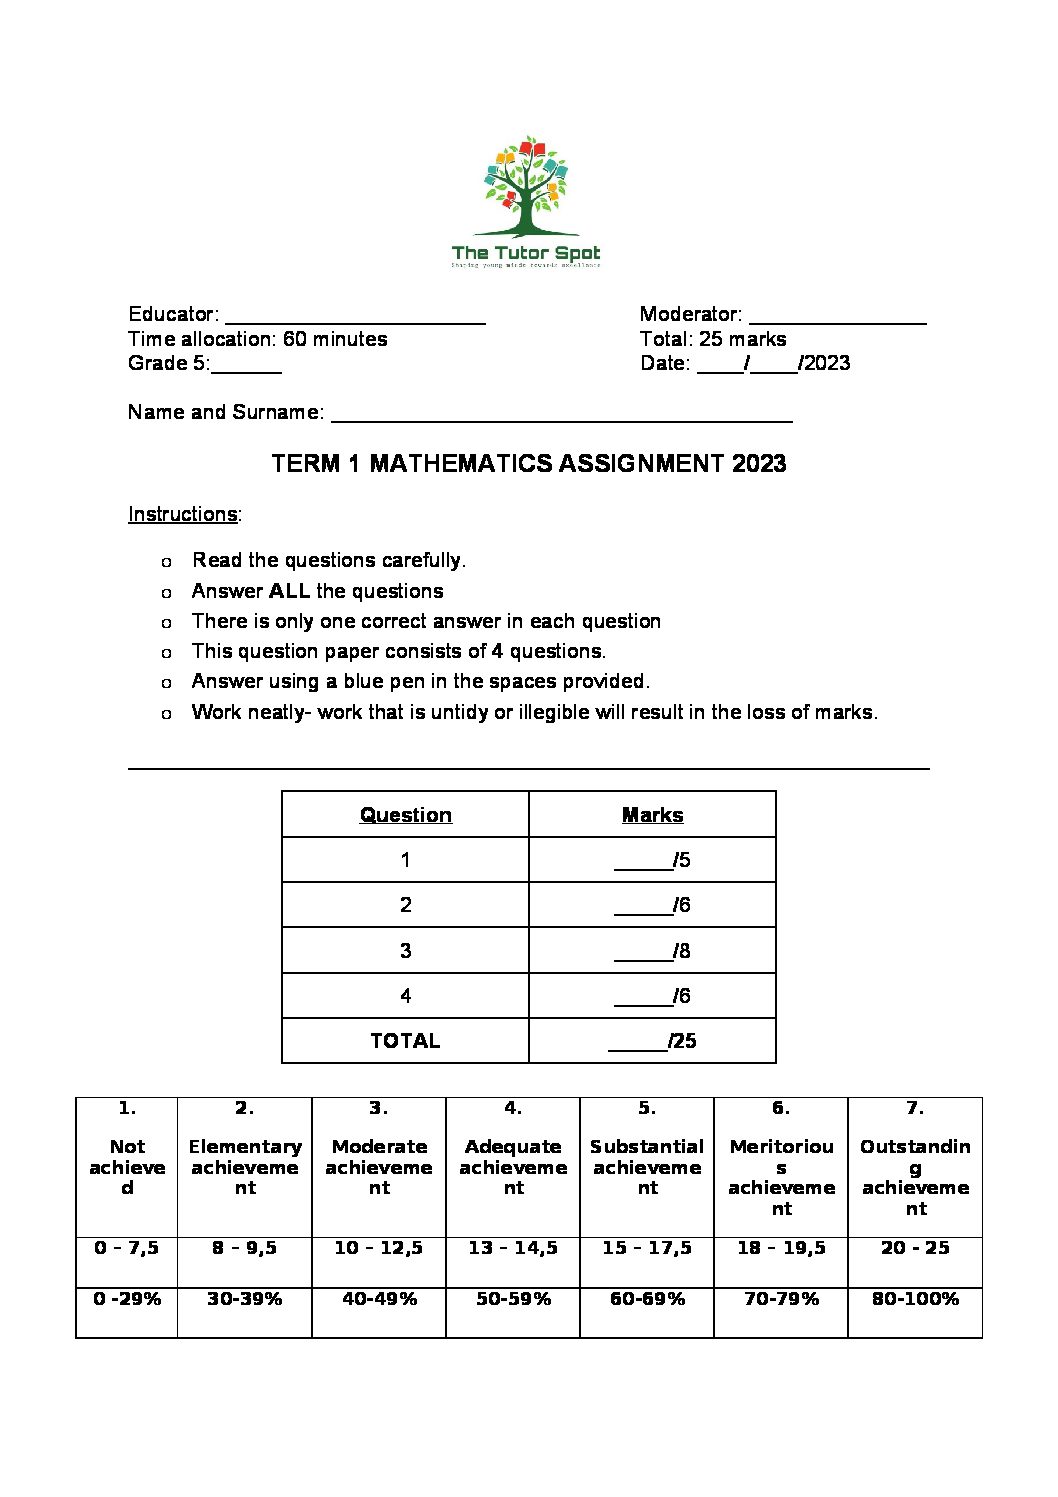 std 10 assignment 2023 pdf